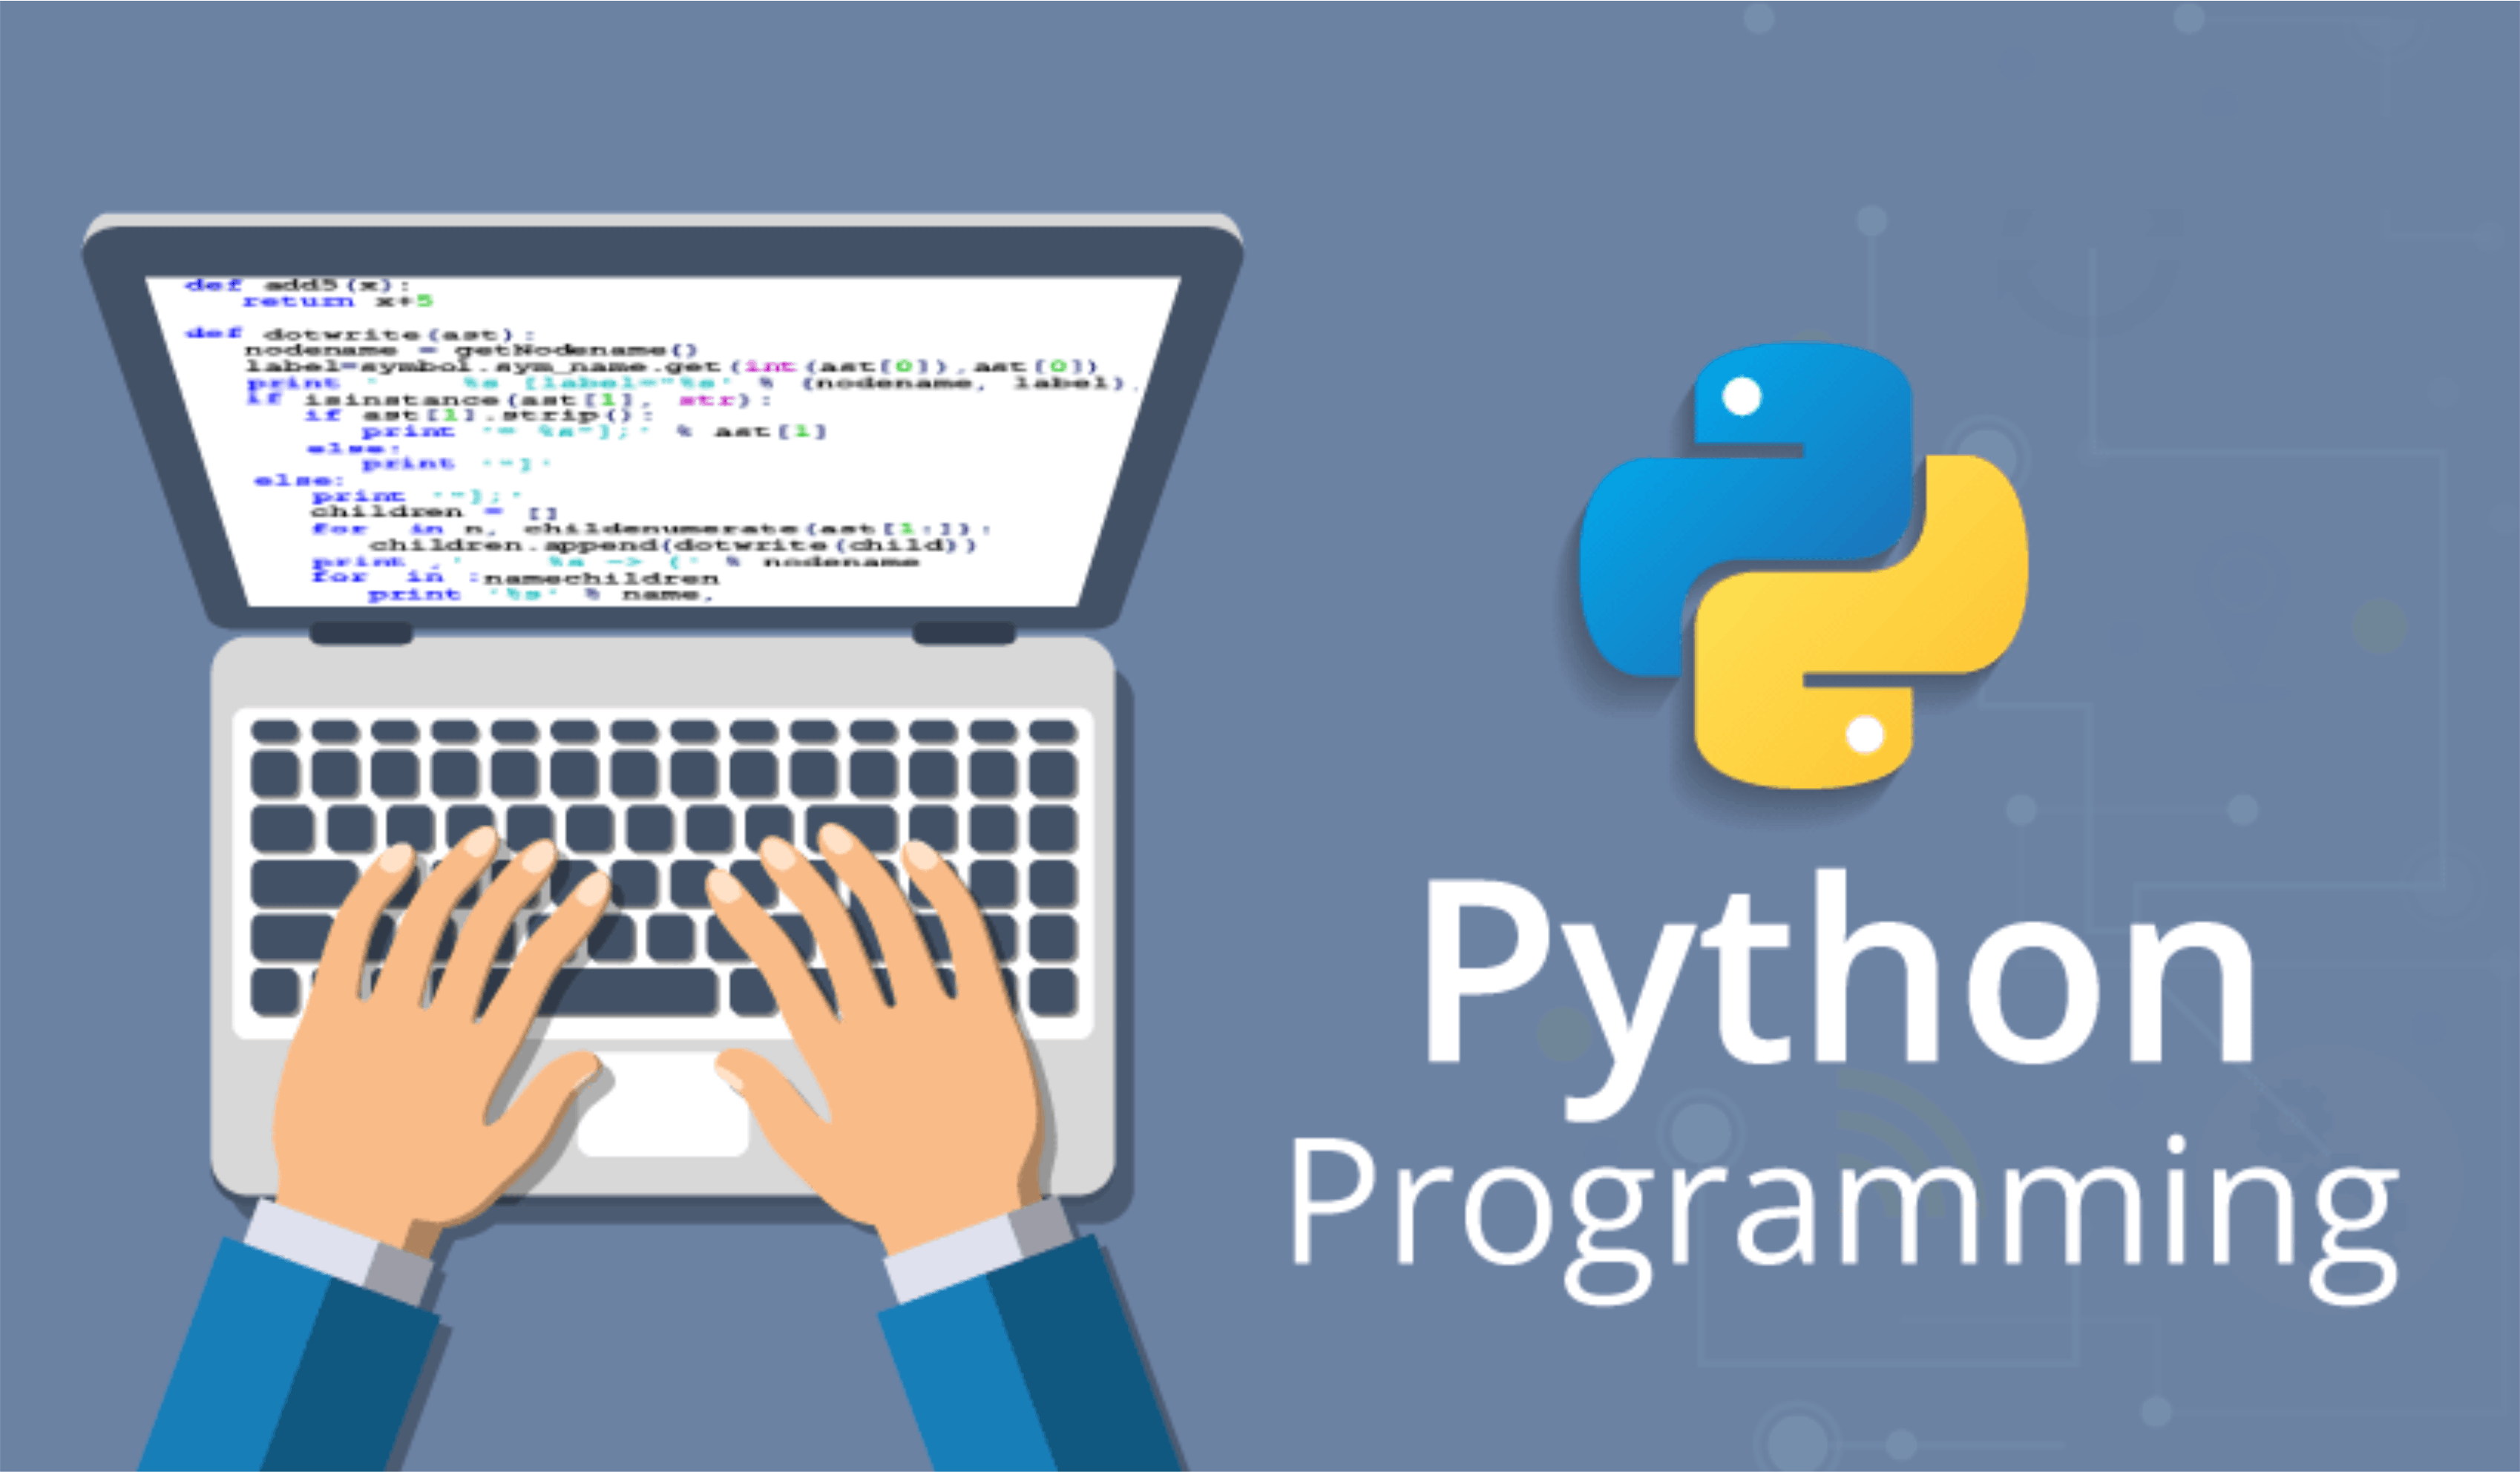 Programming das. Питон язык программирования. Python картинки. Программирование на Python. Программирование Python картинки.